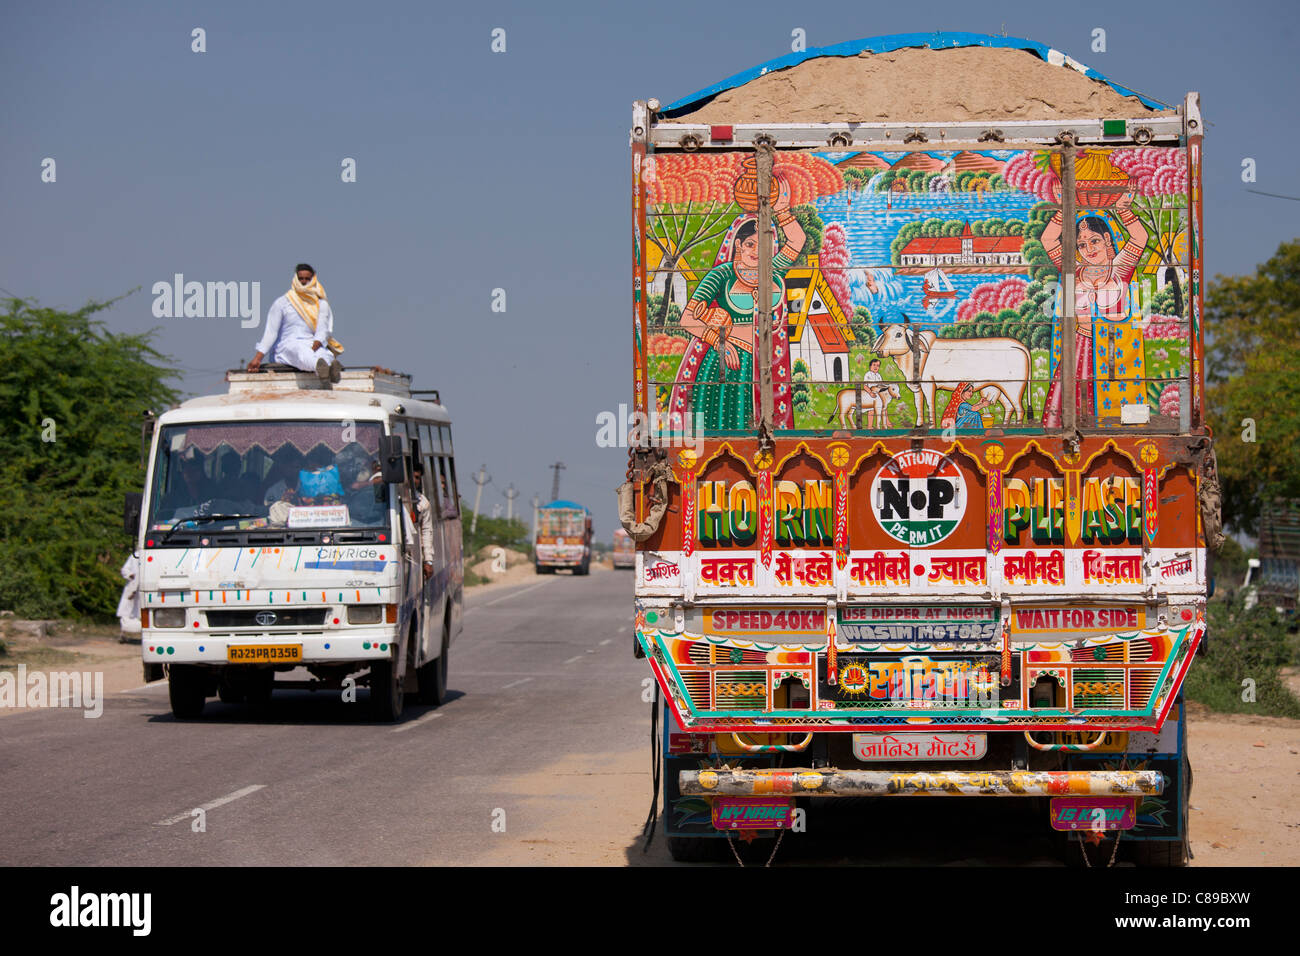 Scena stradale e decorate Tata carrello a Rasulpura in Sawai Madhopur, Rajasthan, India settentrionale Foto Stock